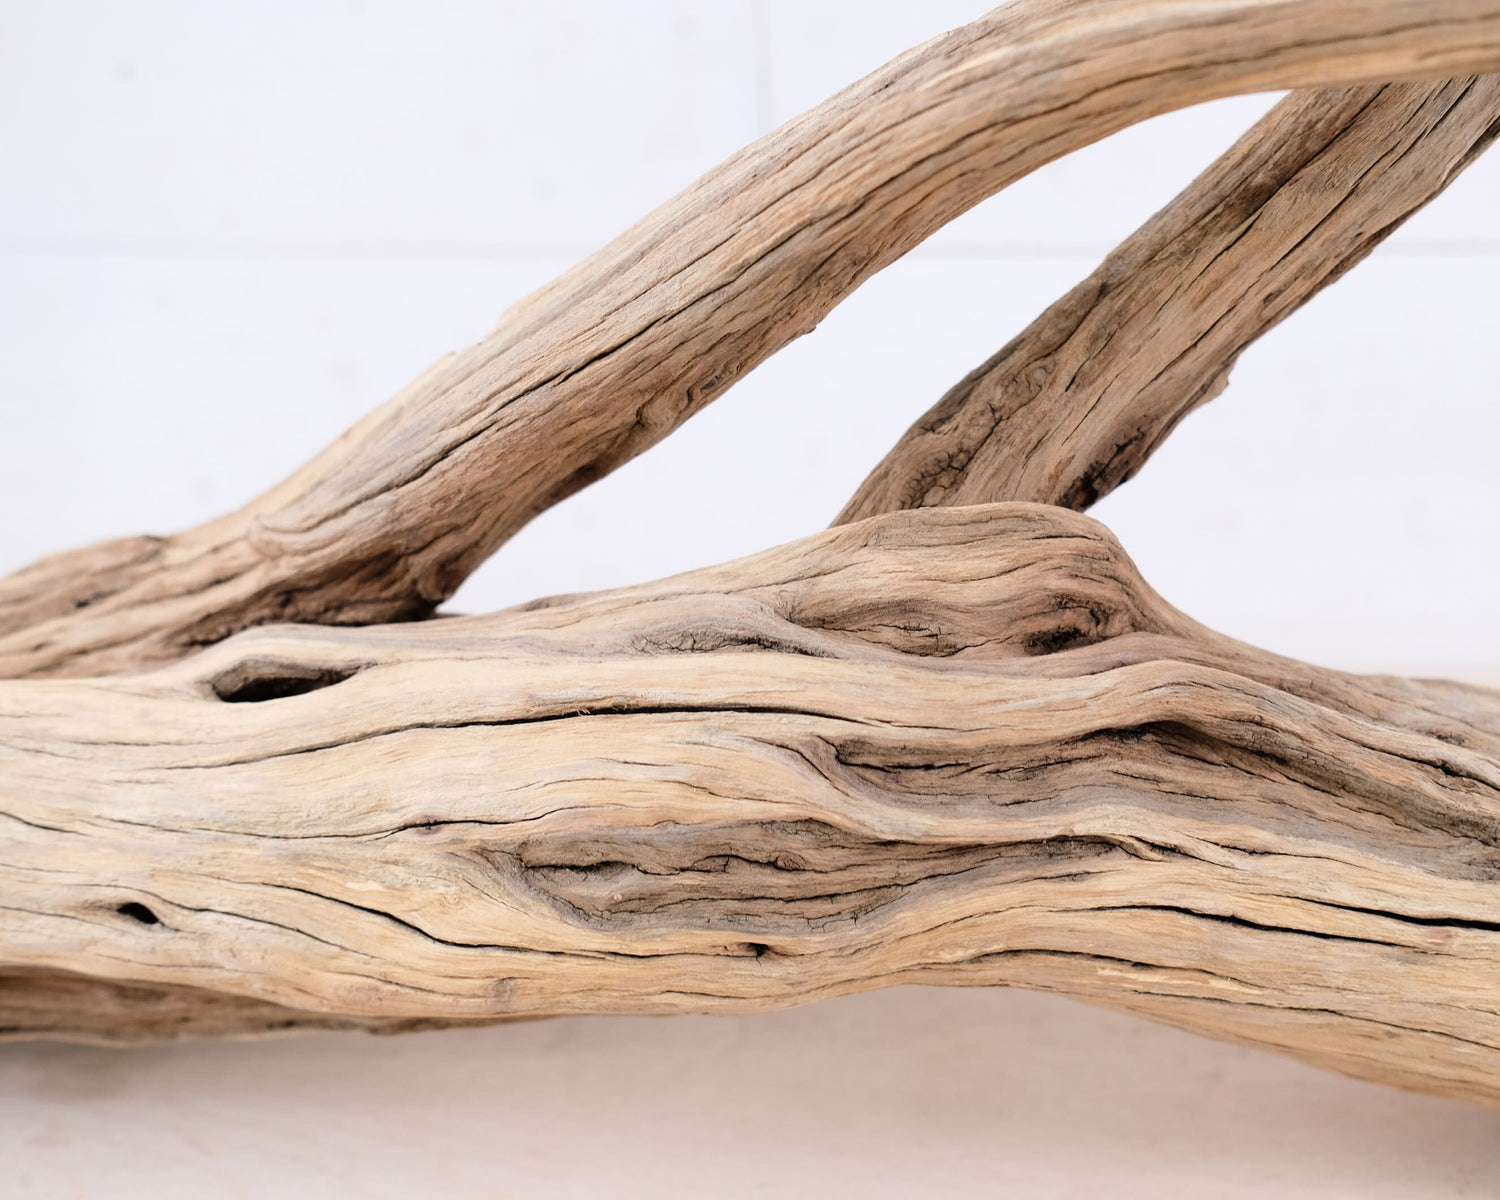 Manzanita 29" Driftwood Branch, Large Reptile Perch, Aquarium Centerpiece Log, Terrarium Wood Climb